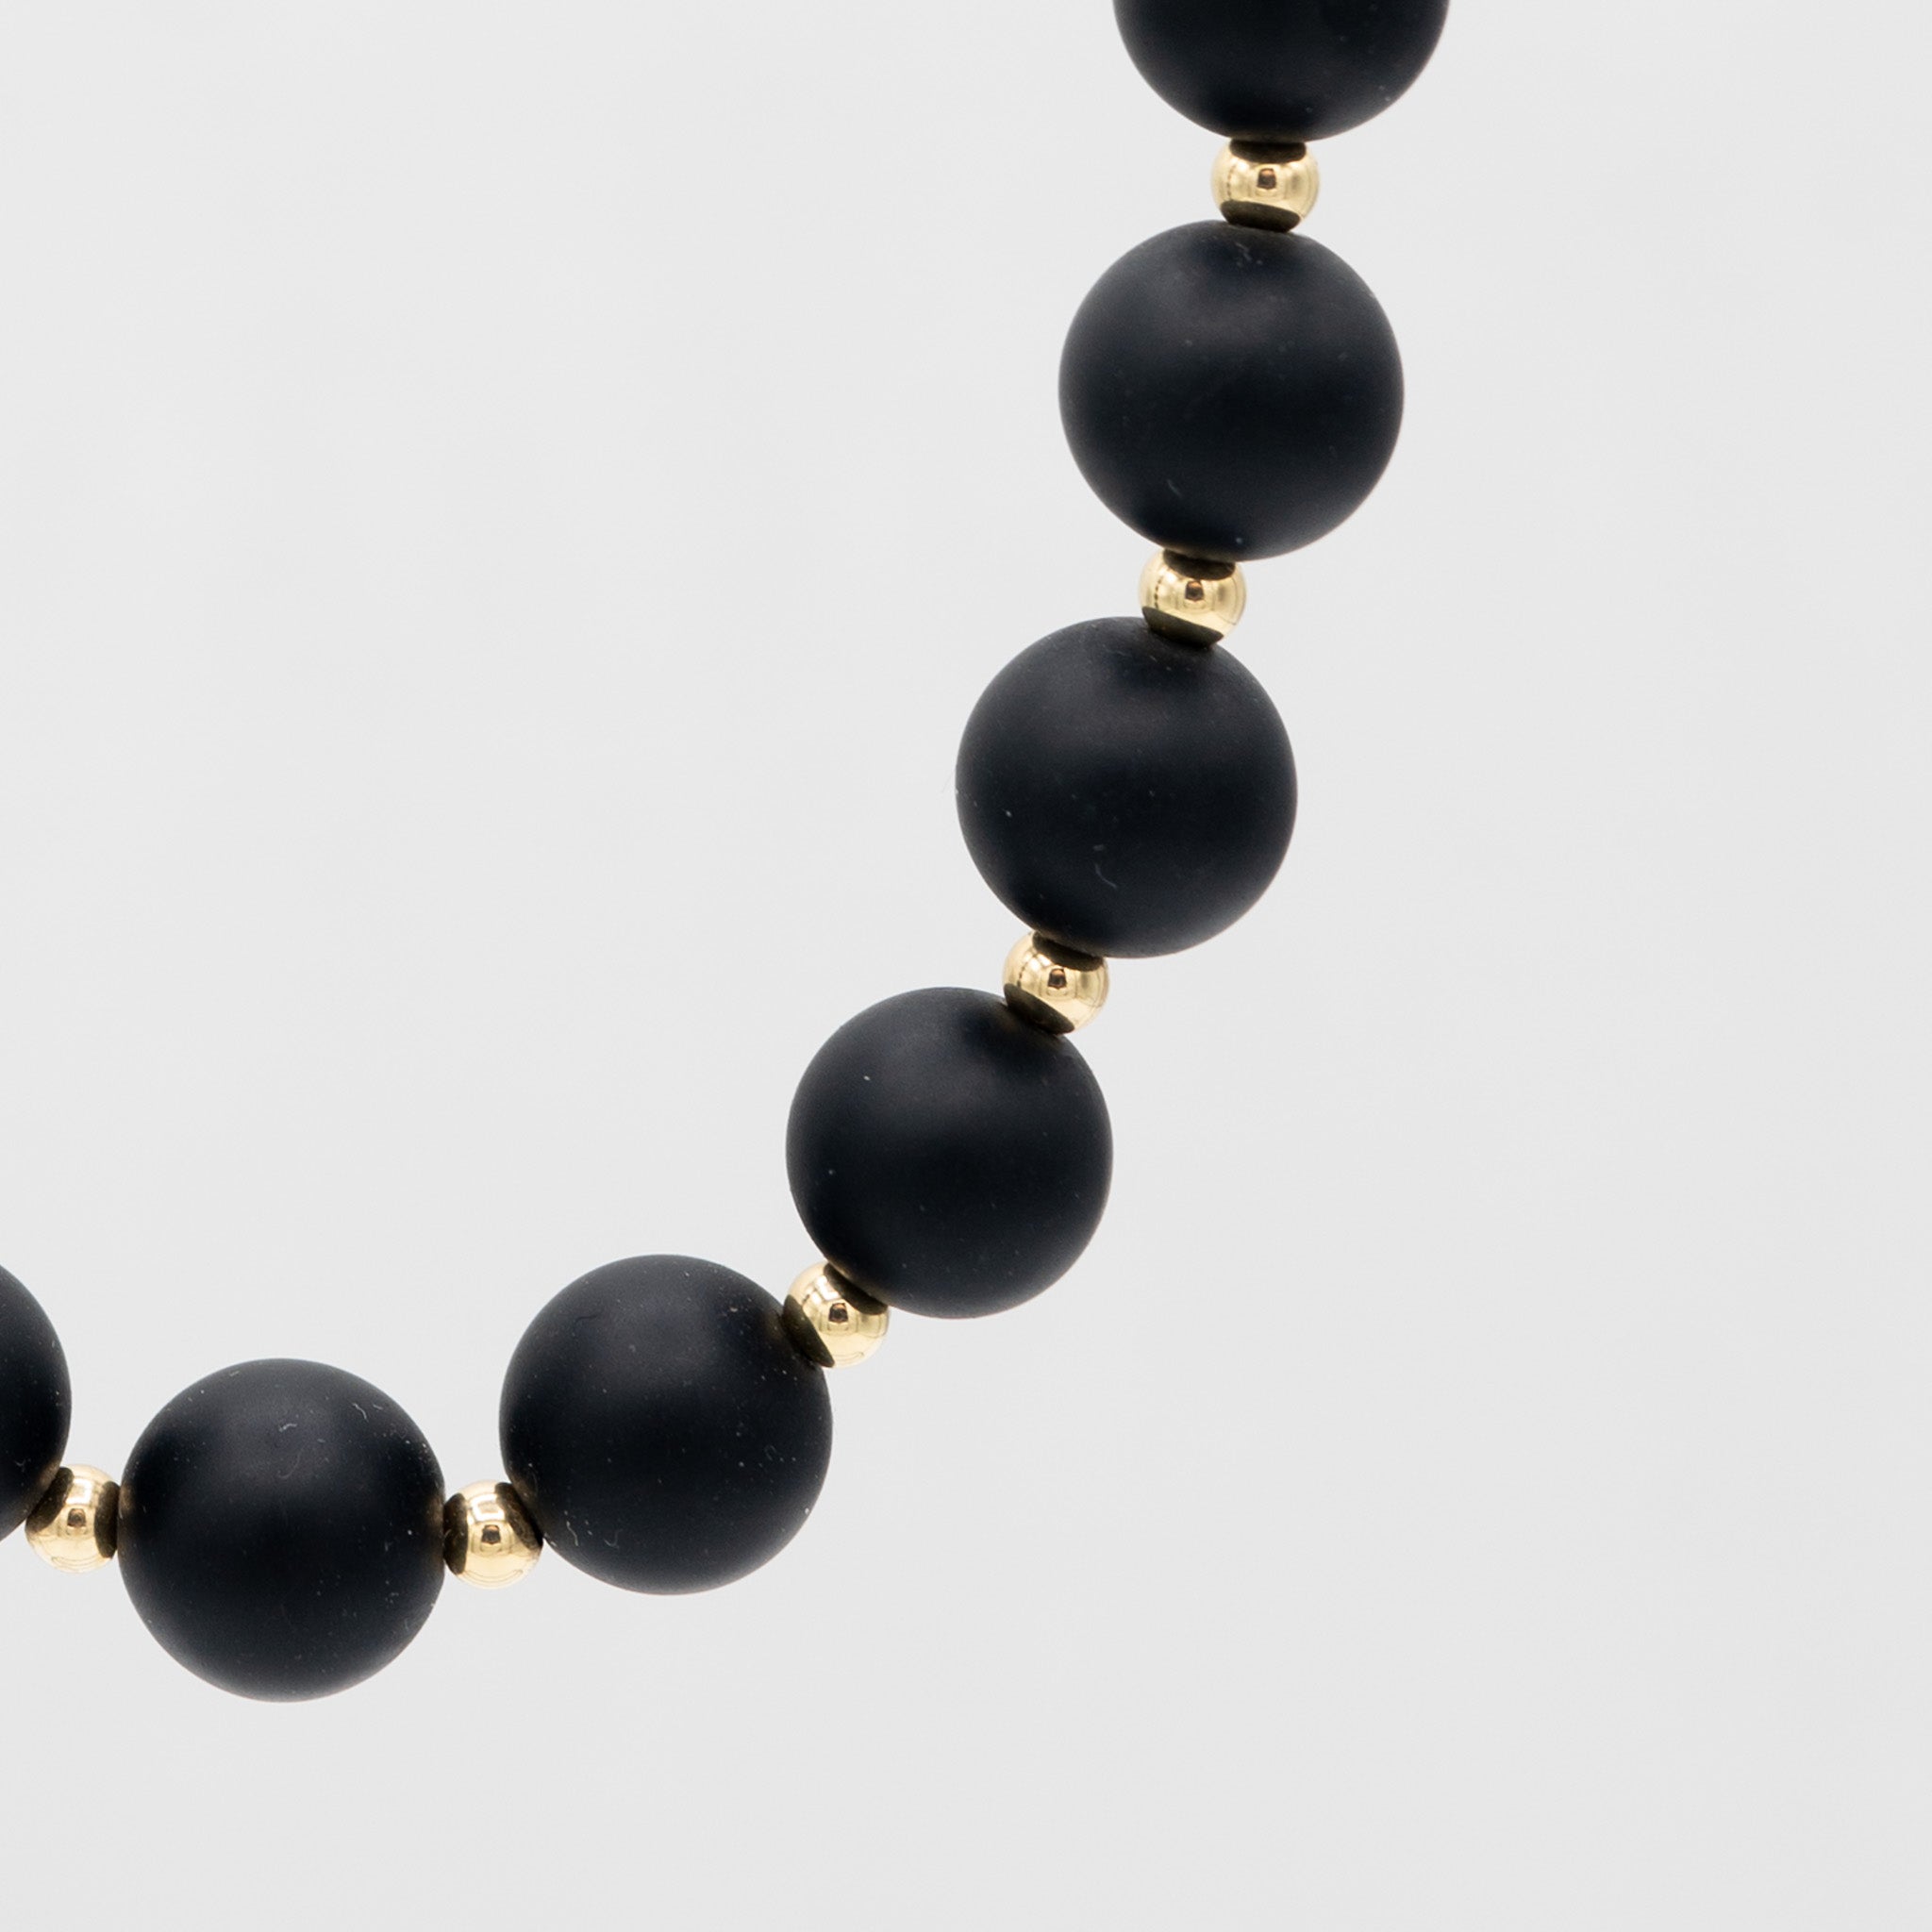 Matte Black Onyx & 14k Gold Filled Large Bead Necklace